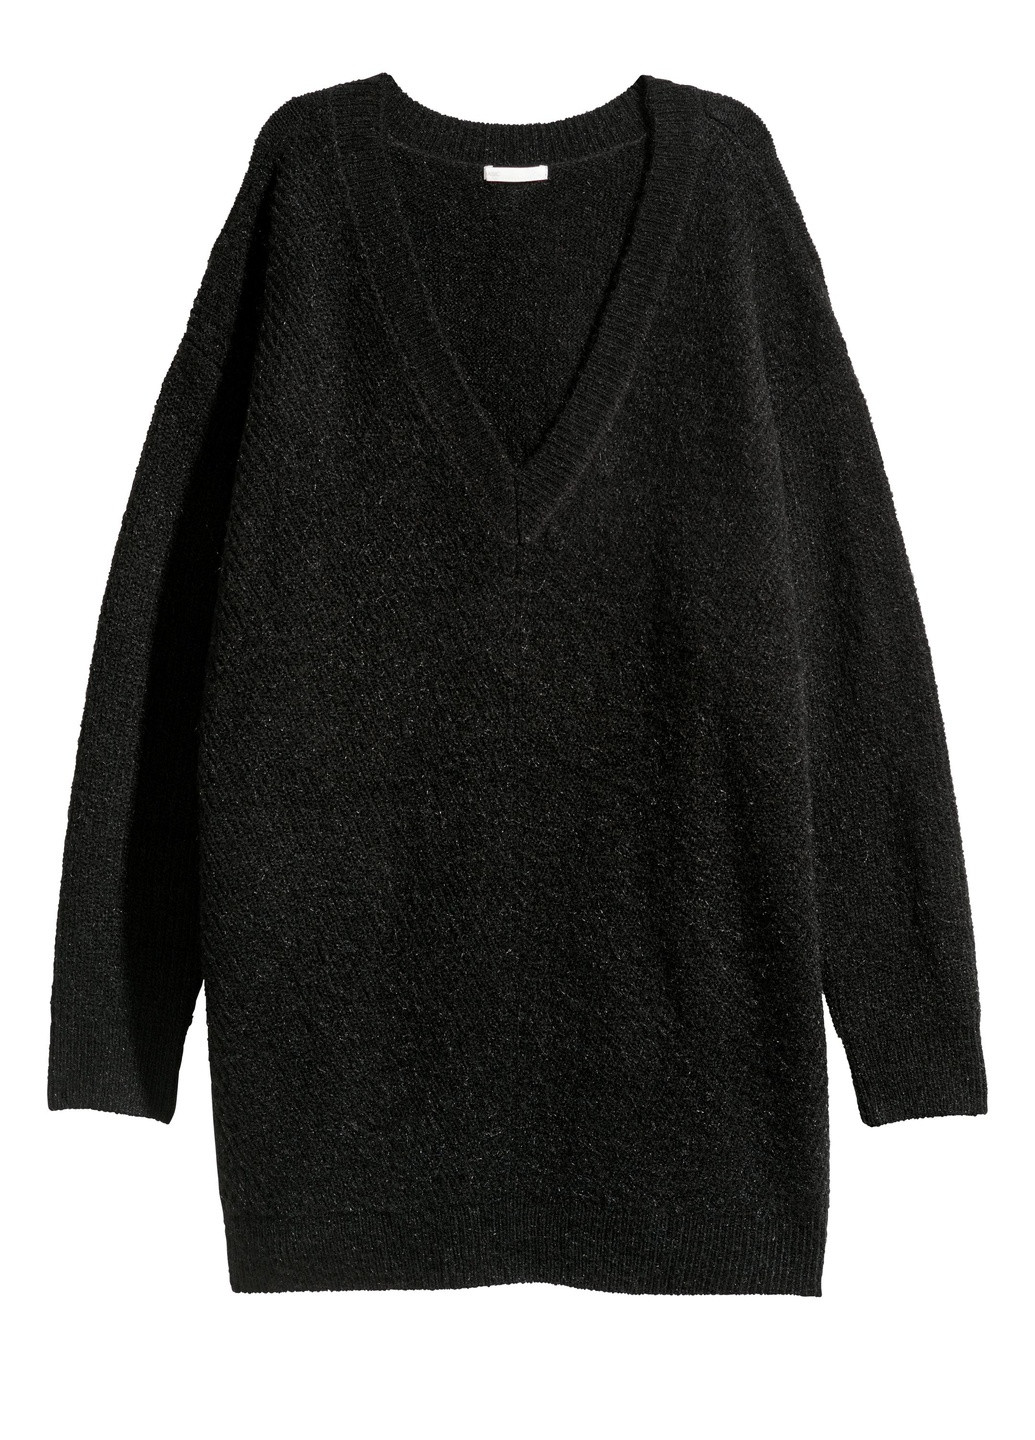 Черный зимний свитер оверсайз H&M